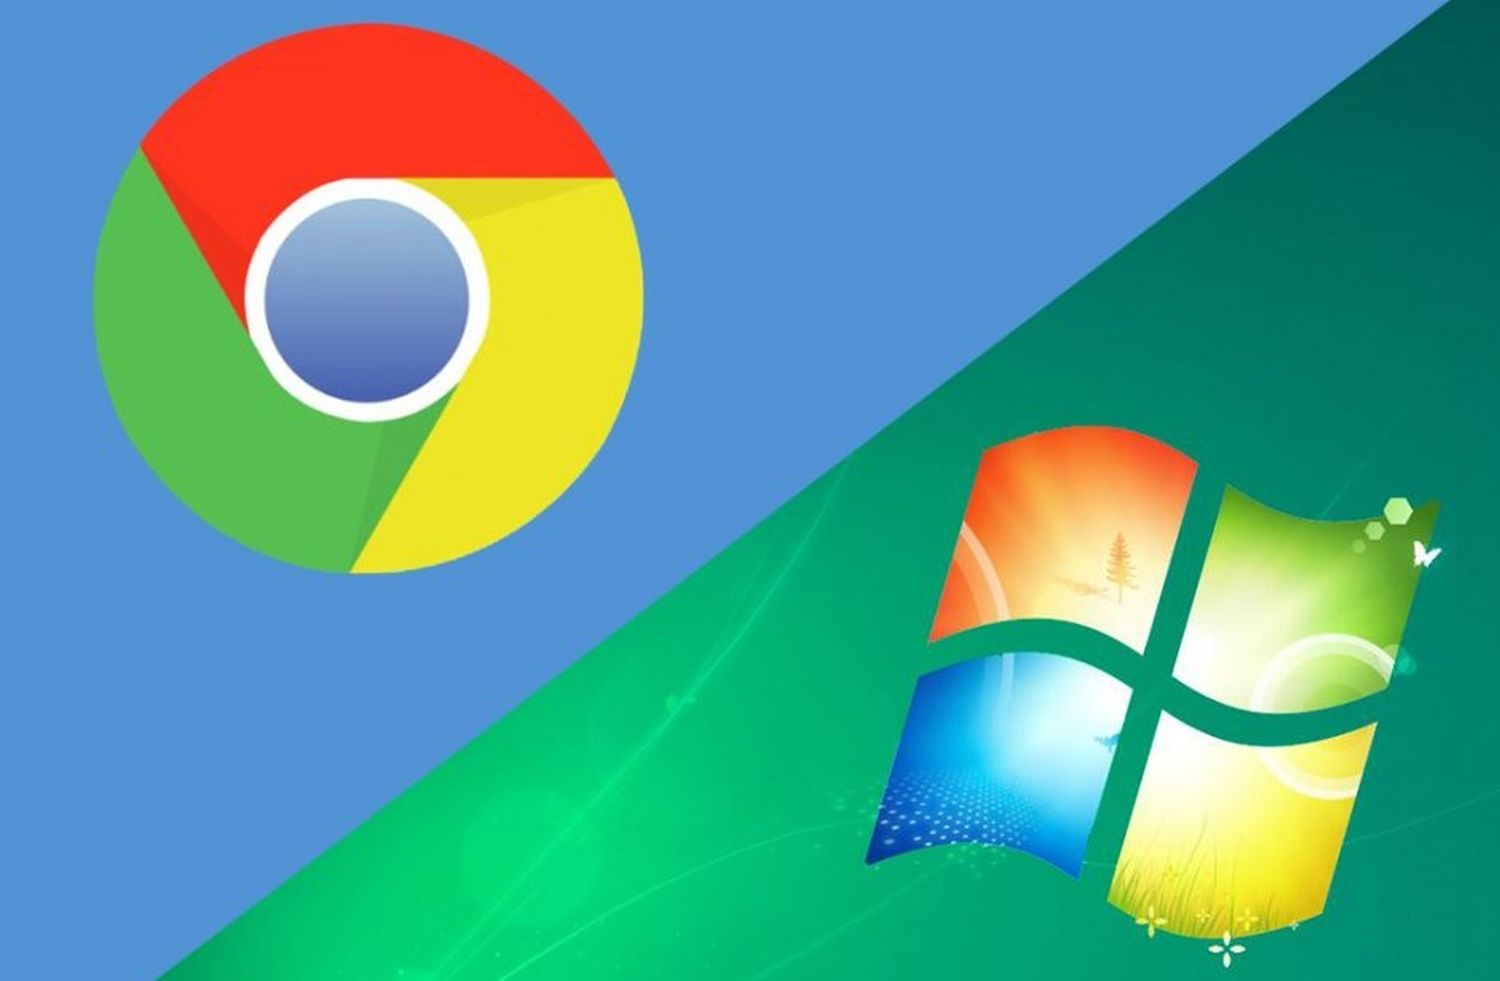 google chrome windows 7